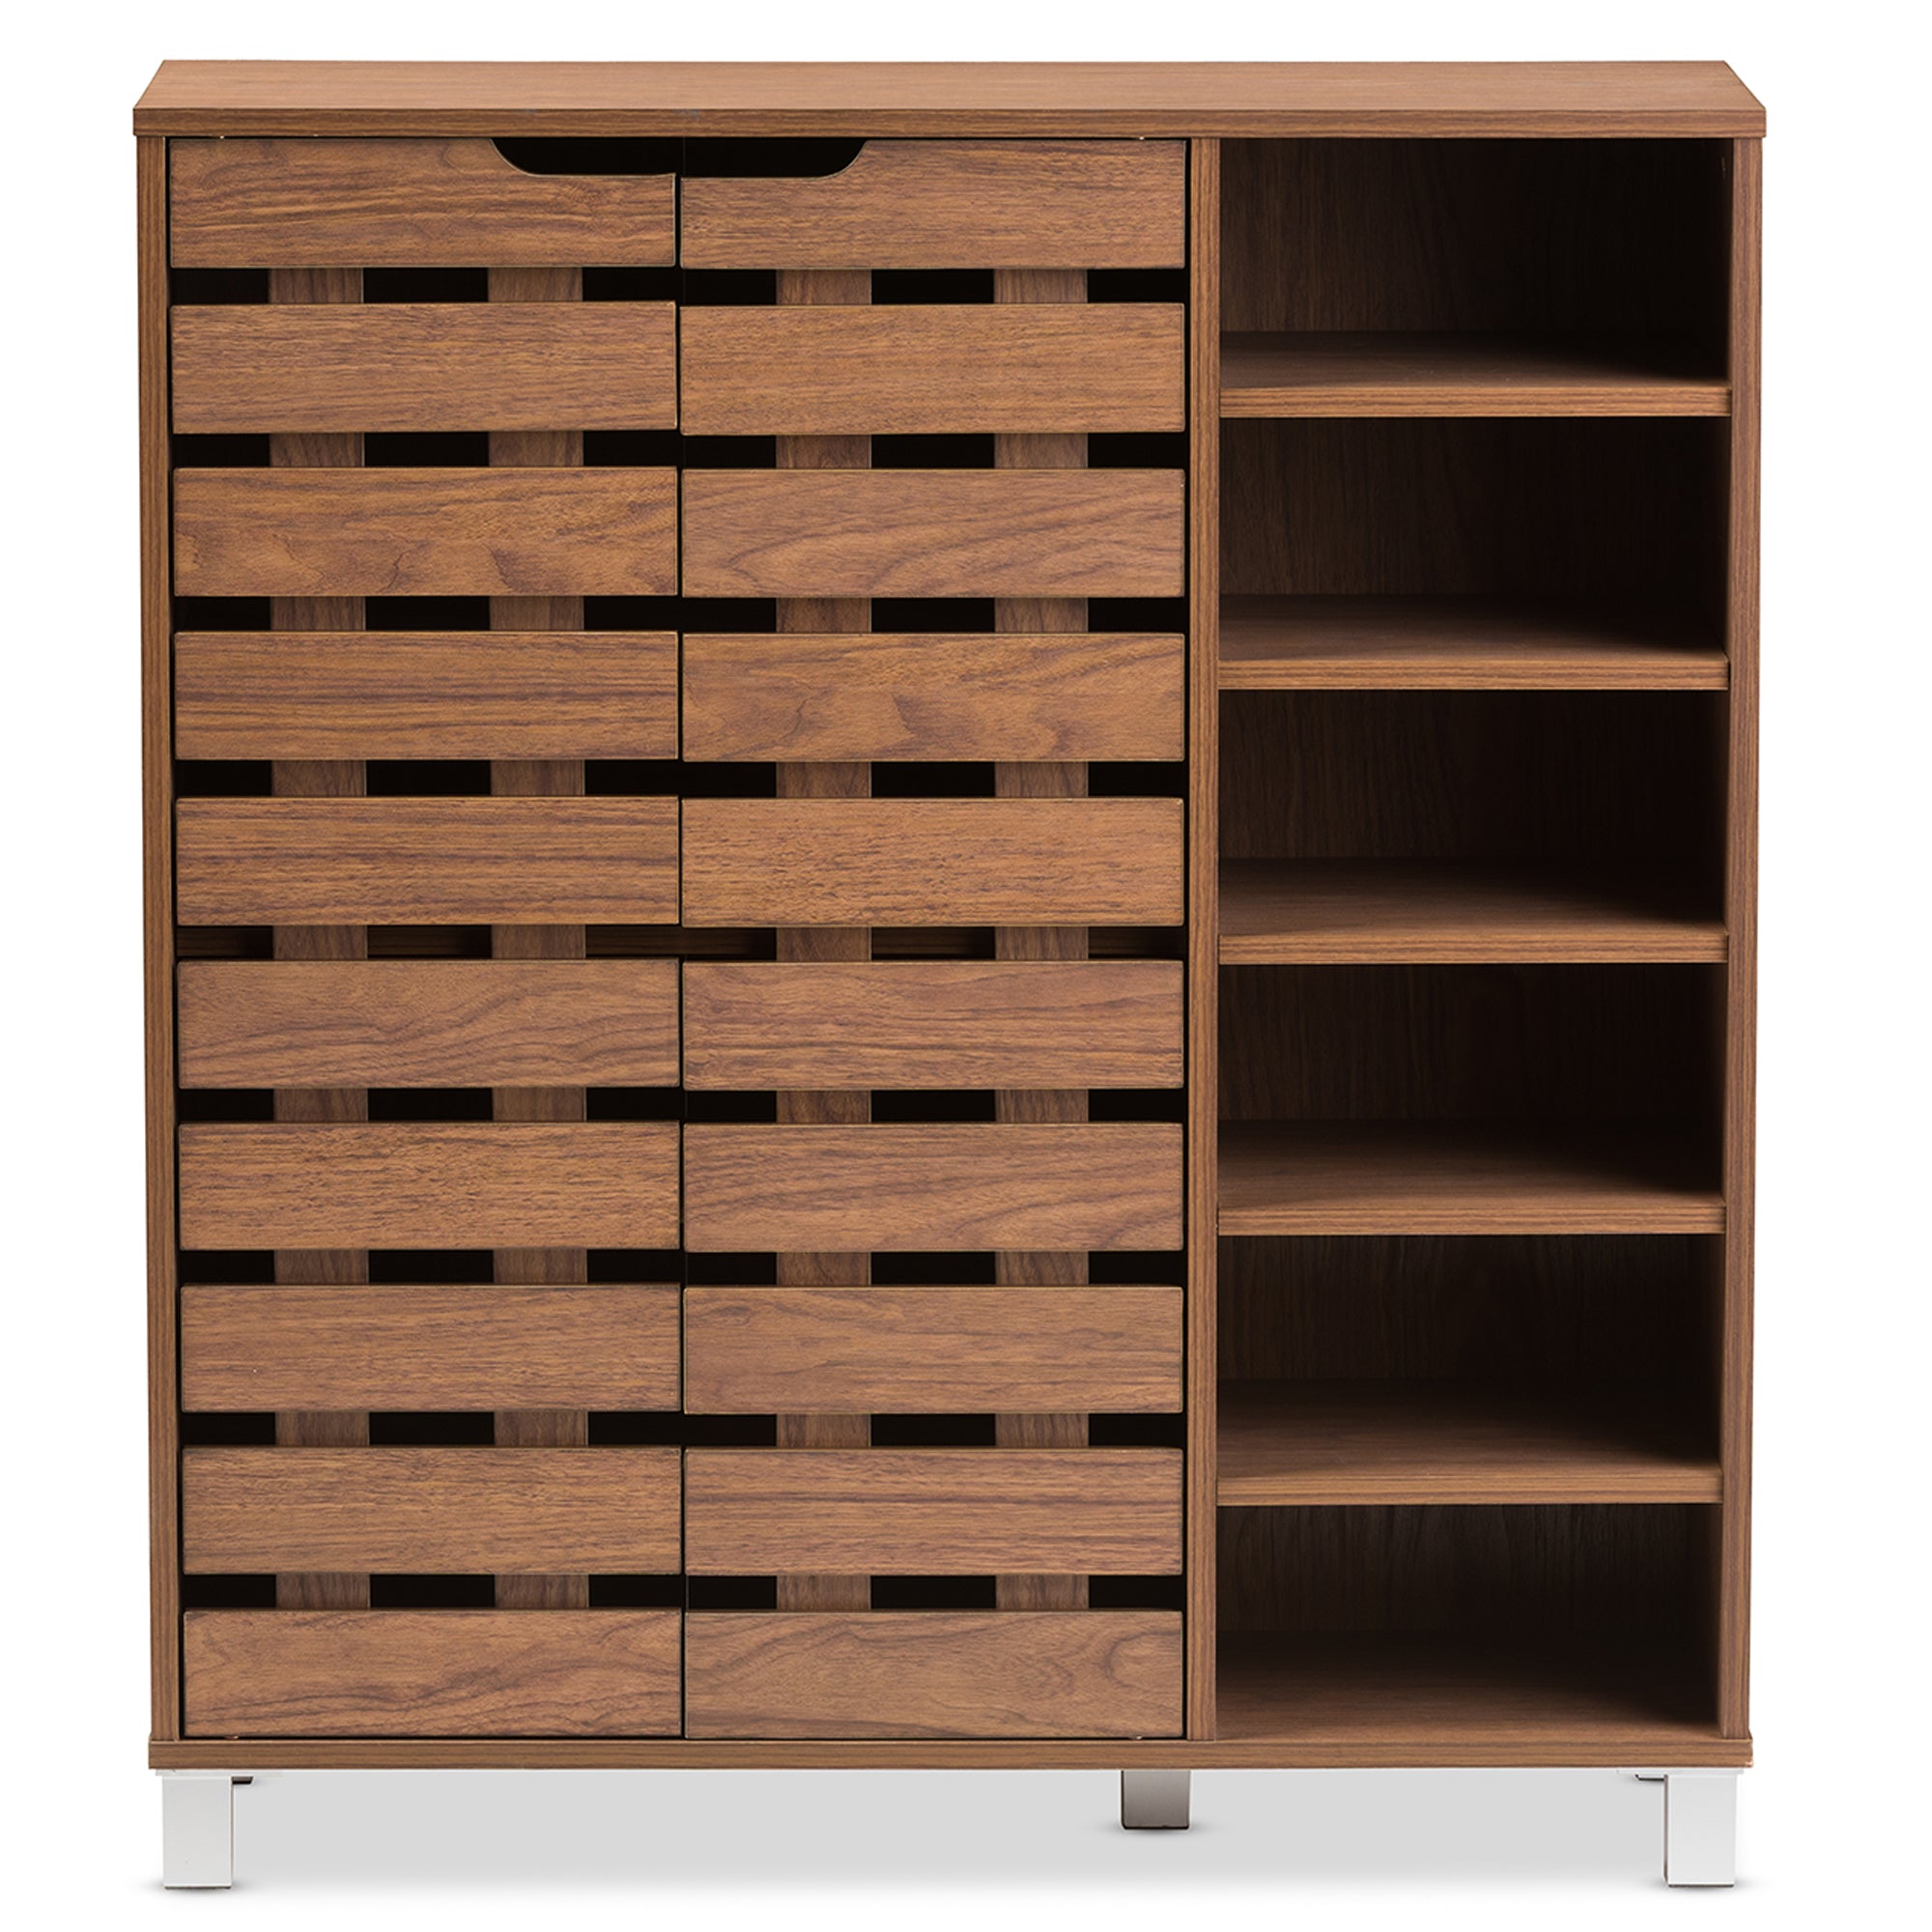 Shirley Contemporary Shoe Cabinet 2-Door with Open Shelves-Shoe Cabinet-Baxton Studio - WI-Wall2Wall Furnishings